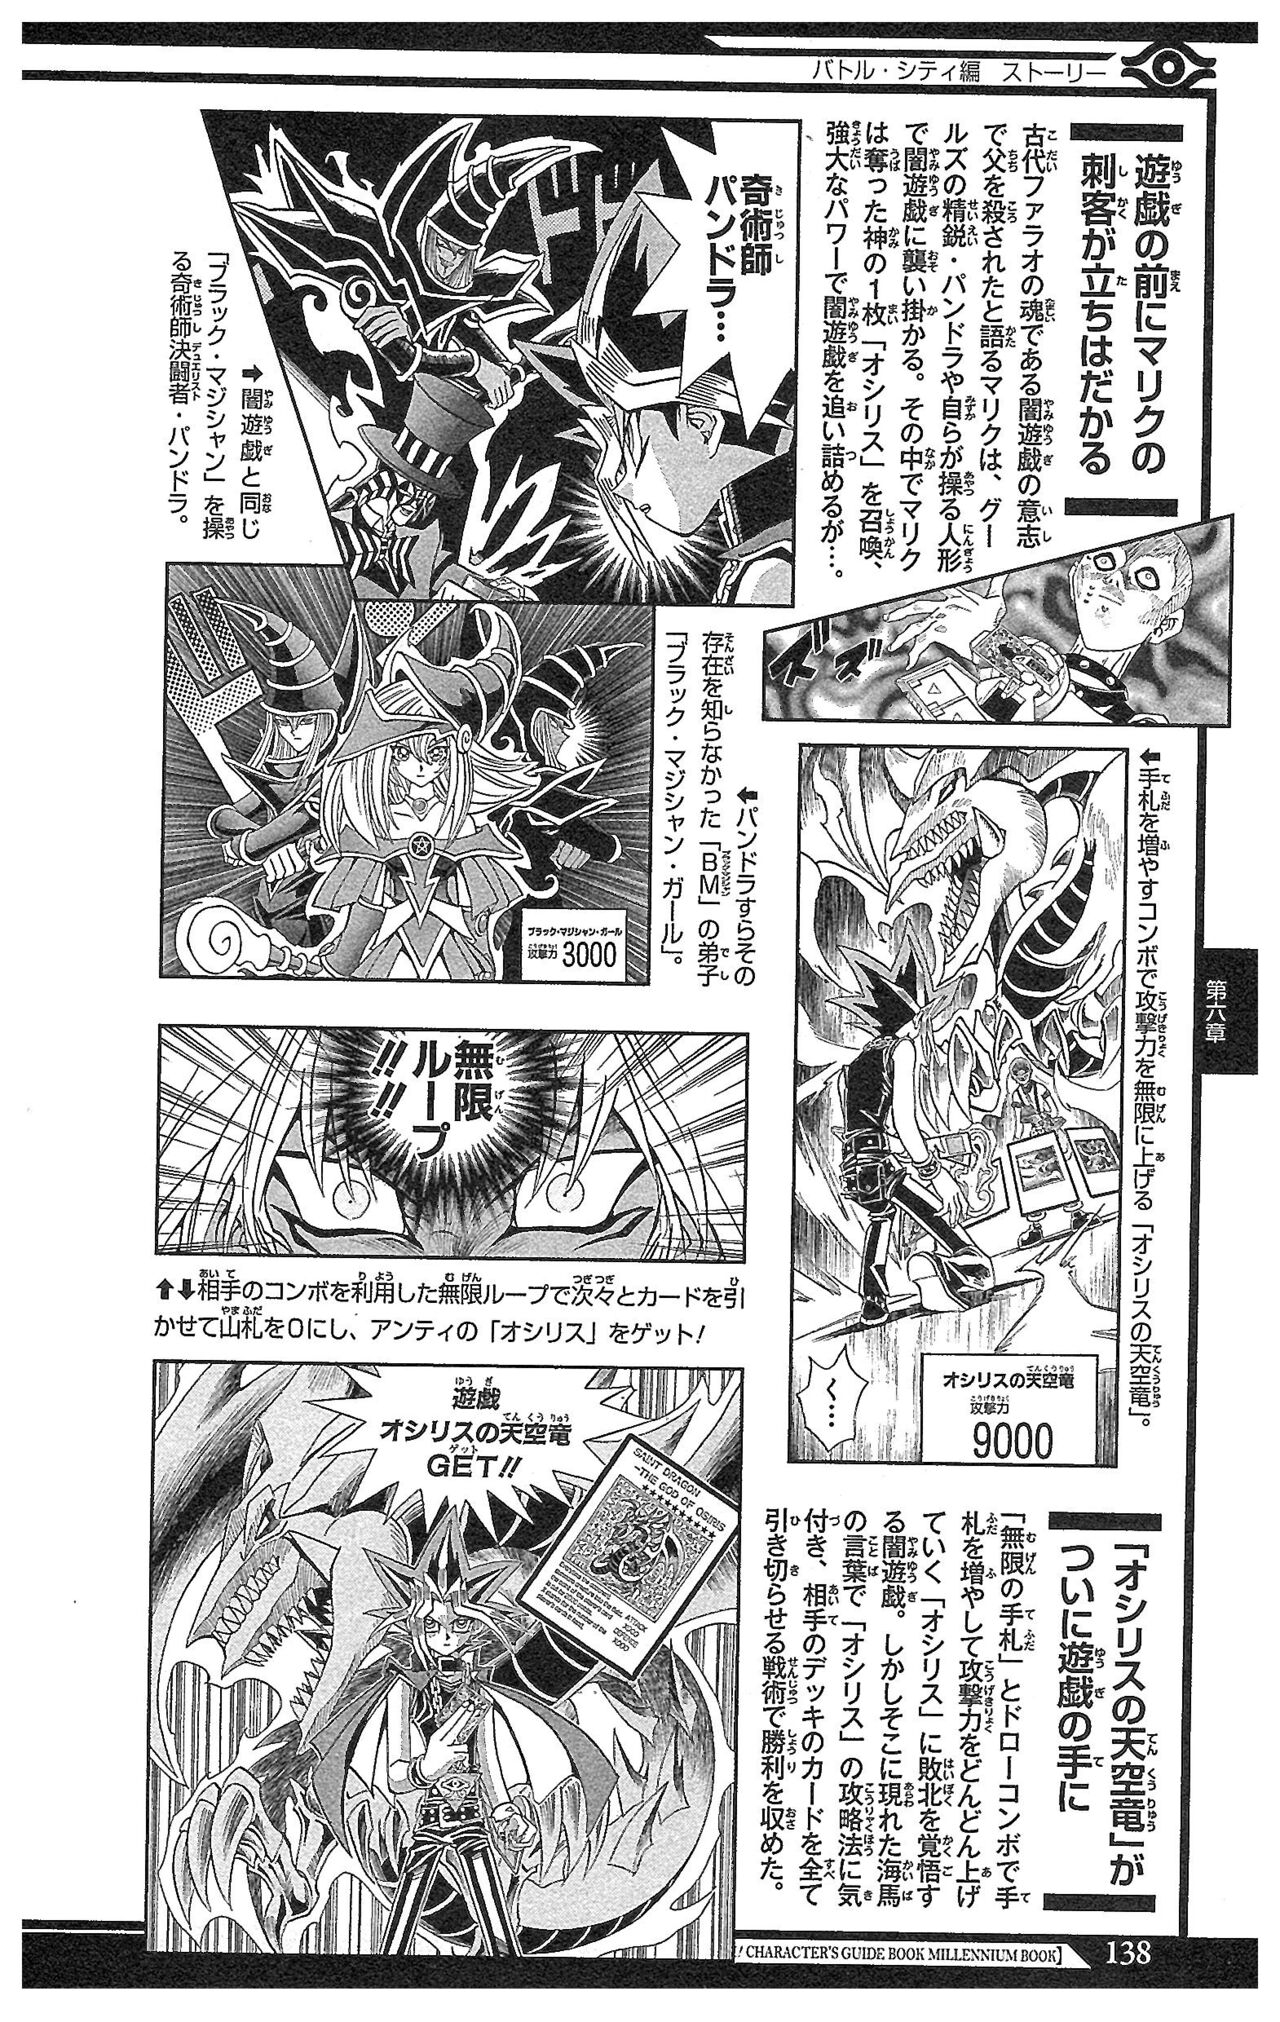 Yu-Gi-Oh! Character Guidebook: Millennium Book 134